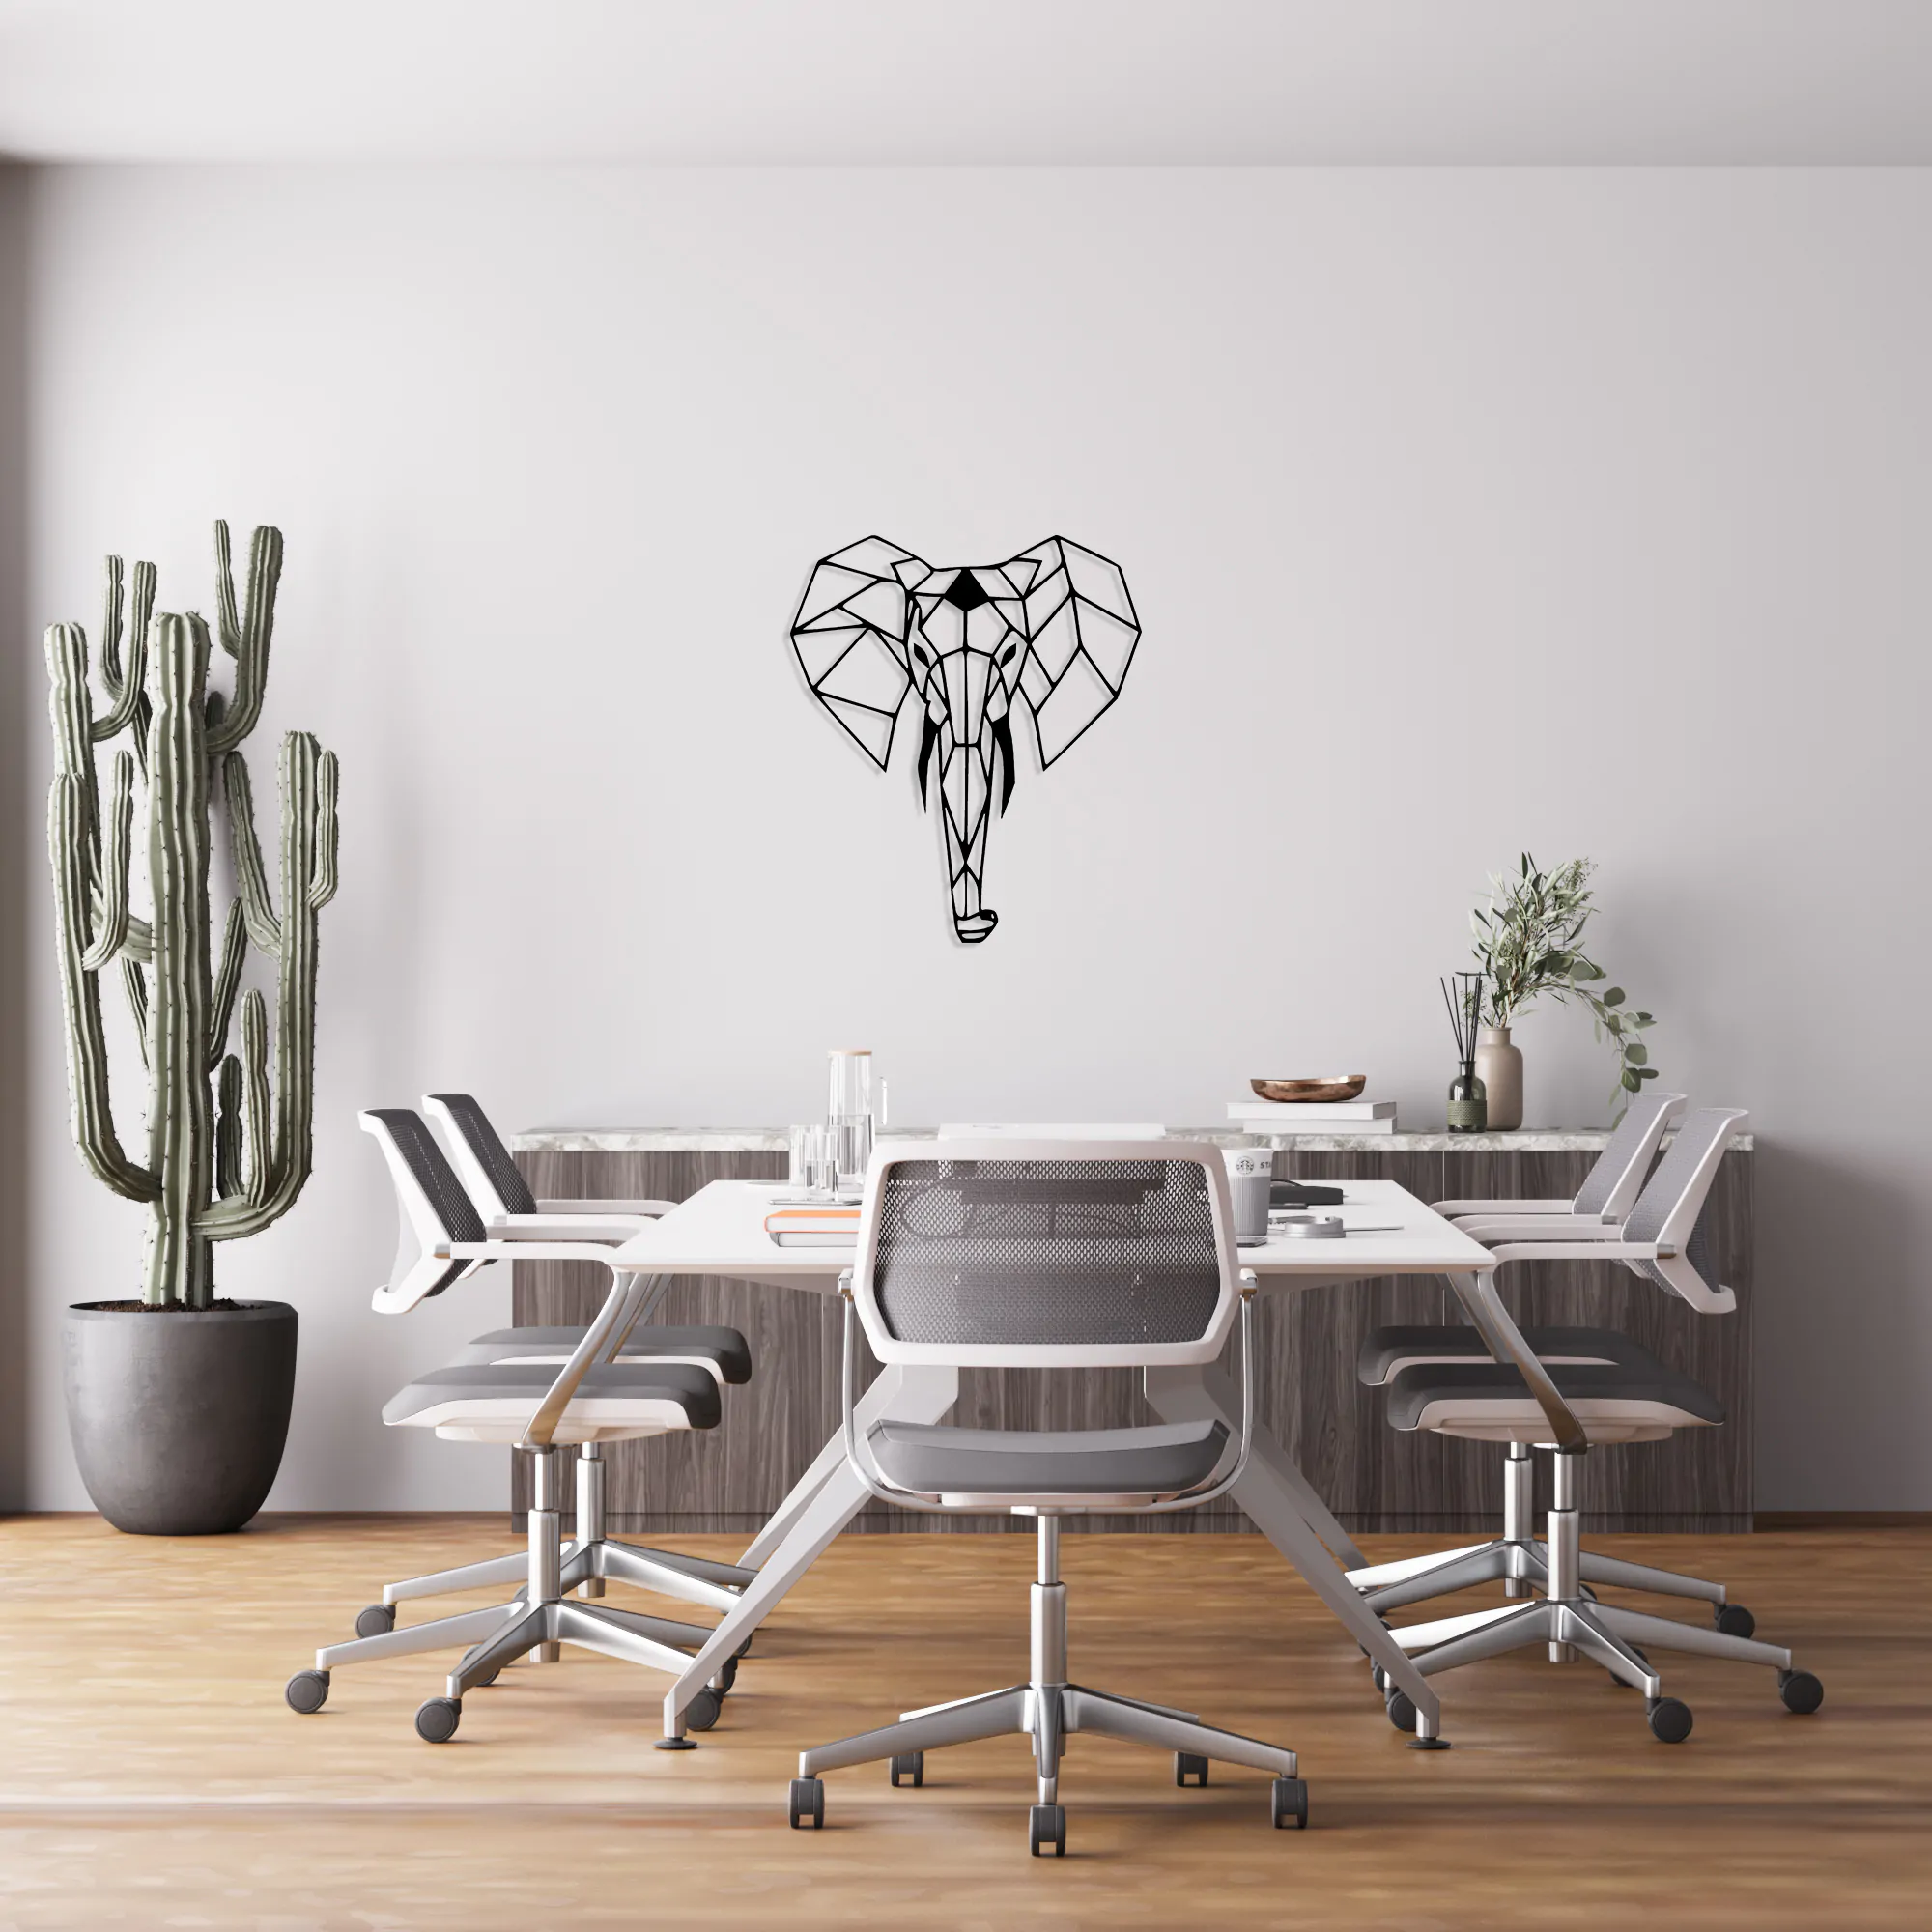 Elephant Metal Wall Art